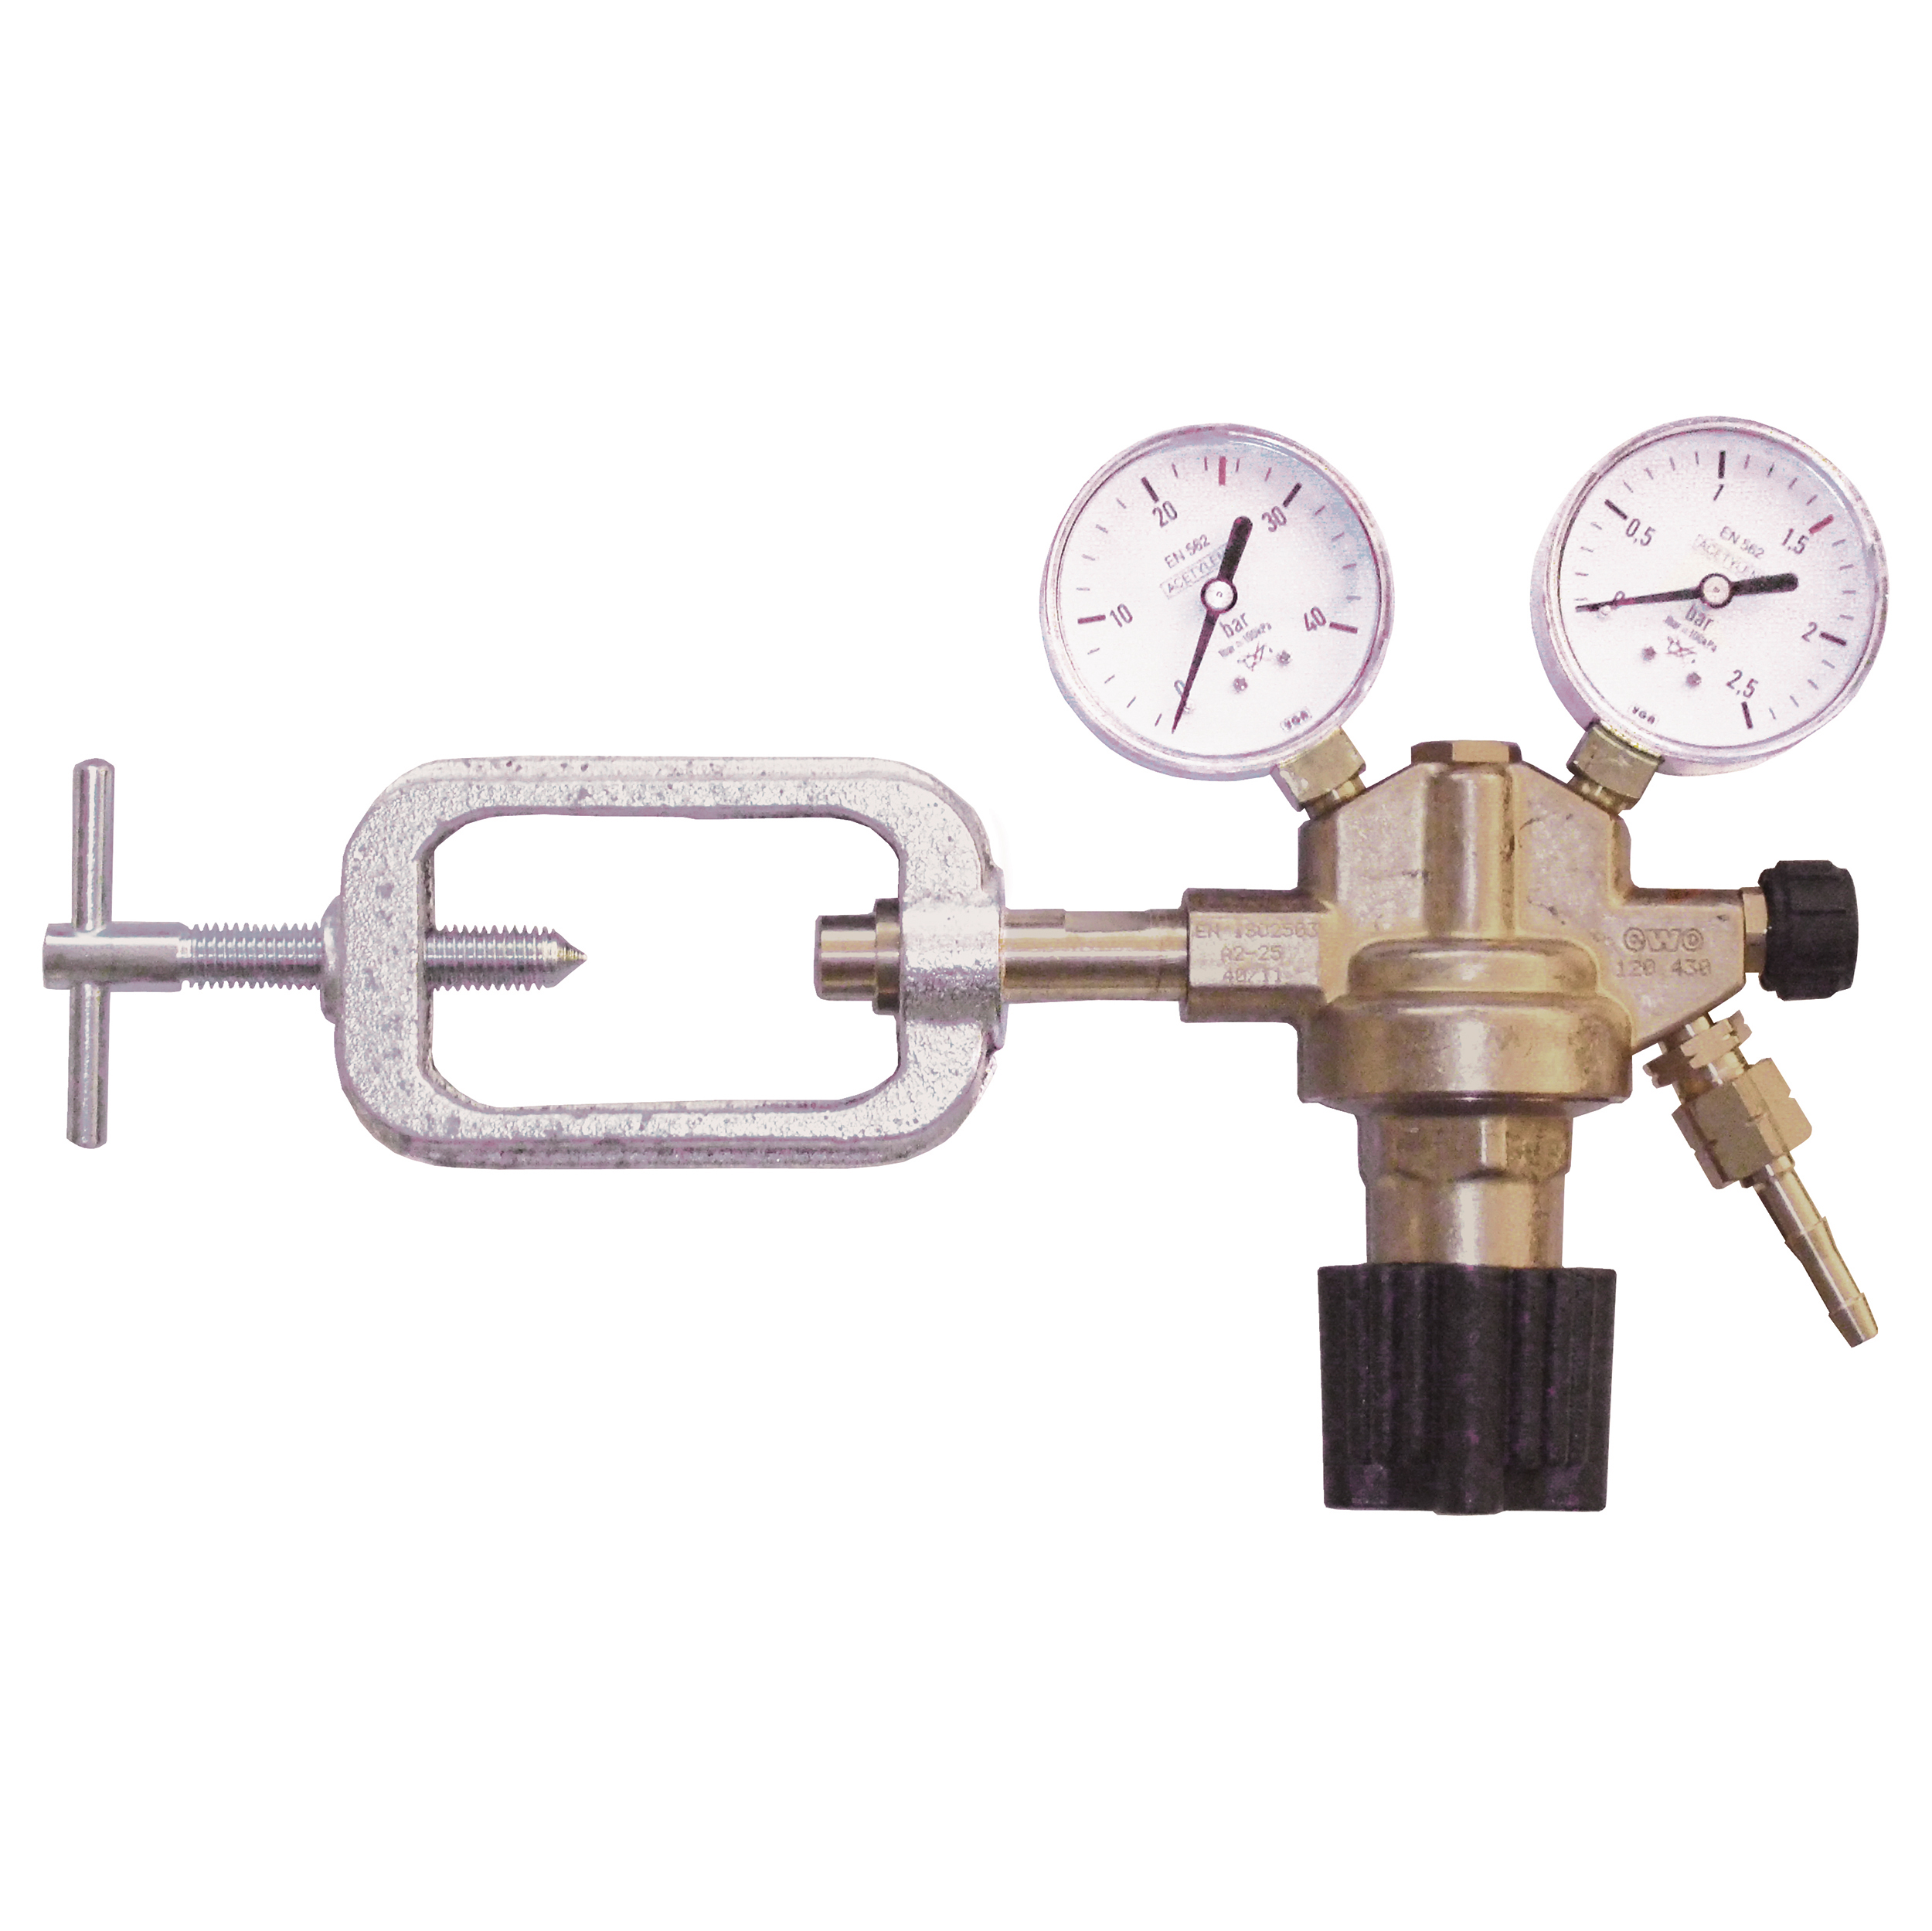 1-step gas regulator for 200 bar cylinders, burnable gas